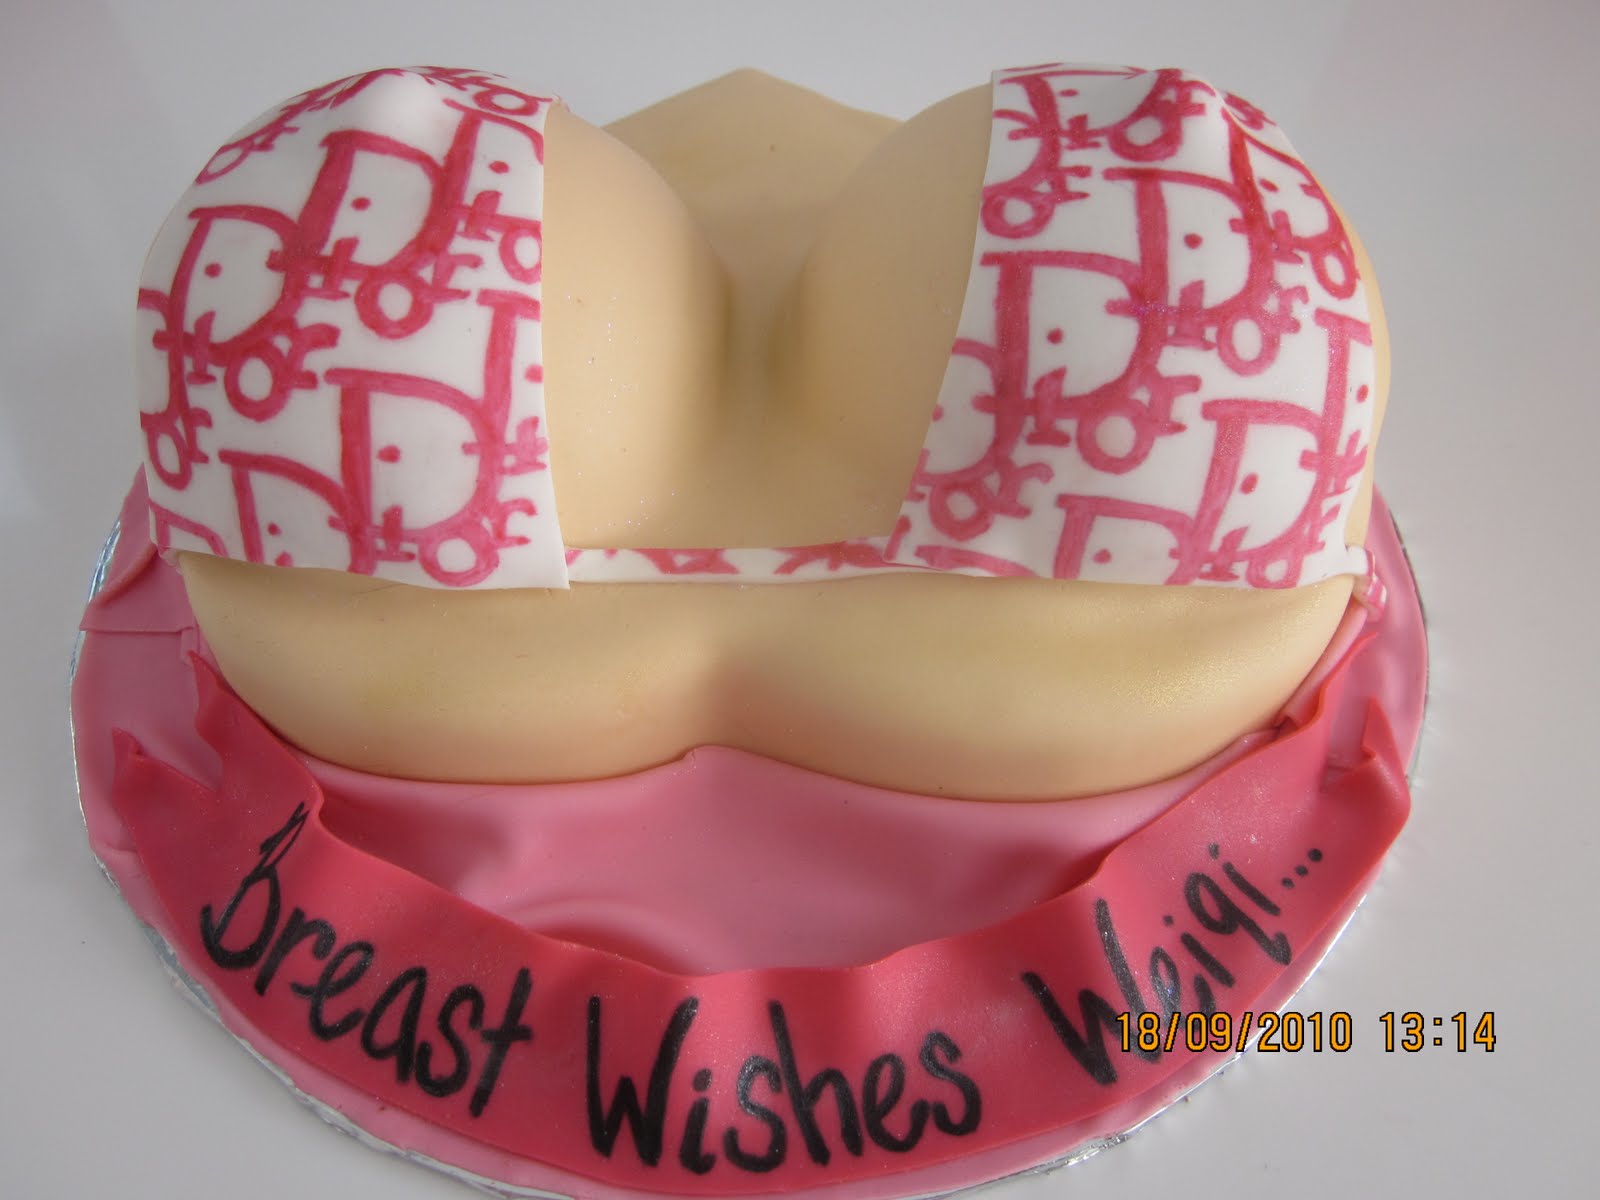 Boob Cake and Dick Cake